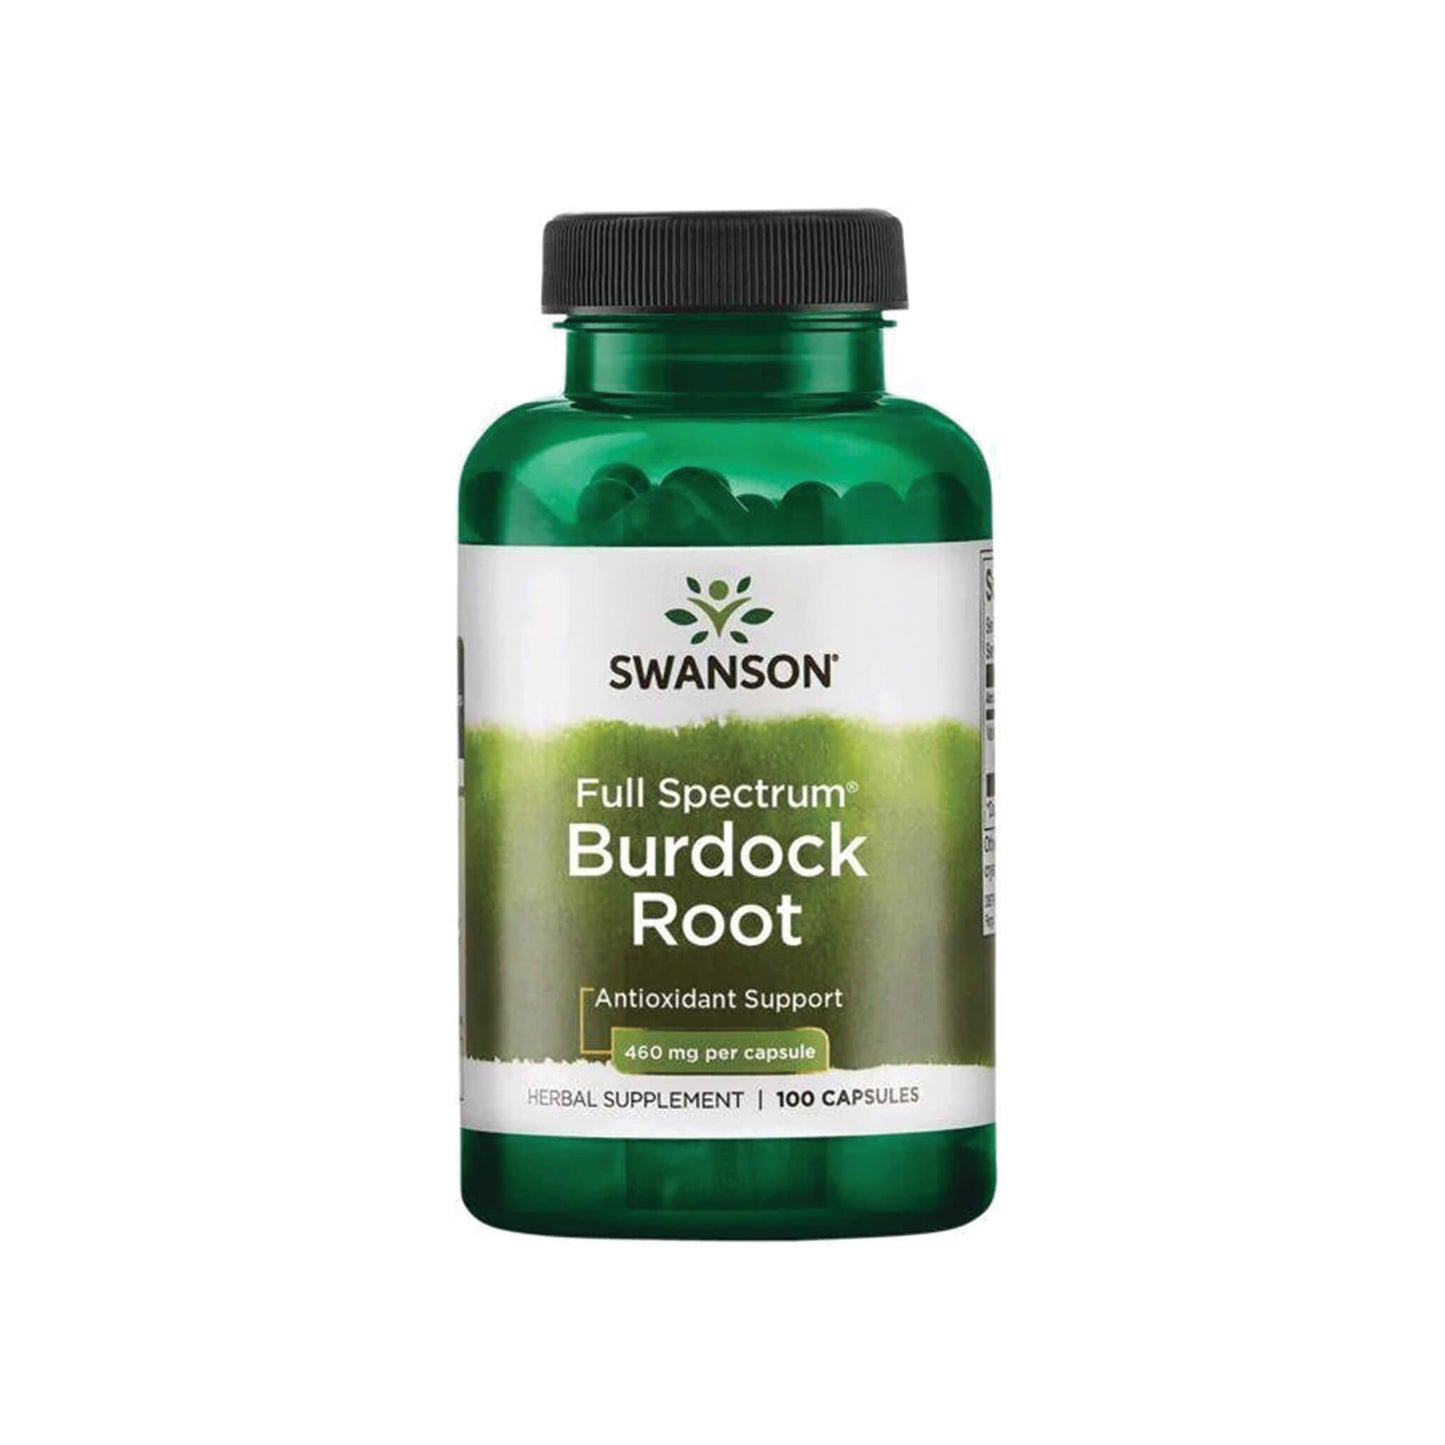 Swanson, Full Spectrum Burdock Root, 460 mg - 100 Capsules